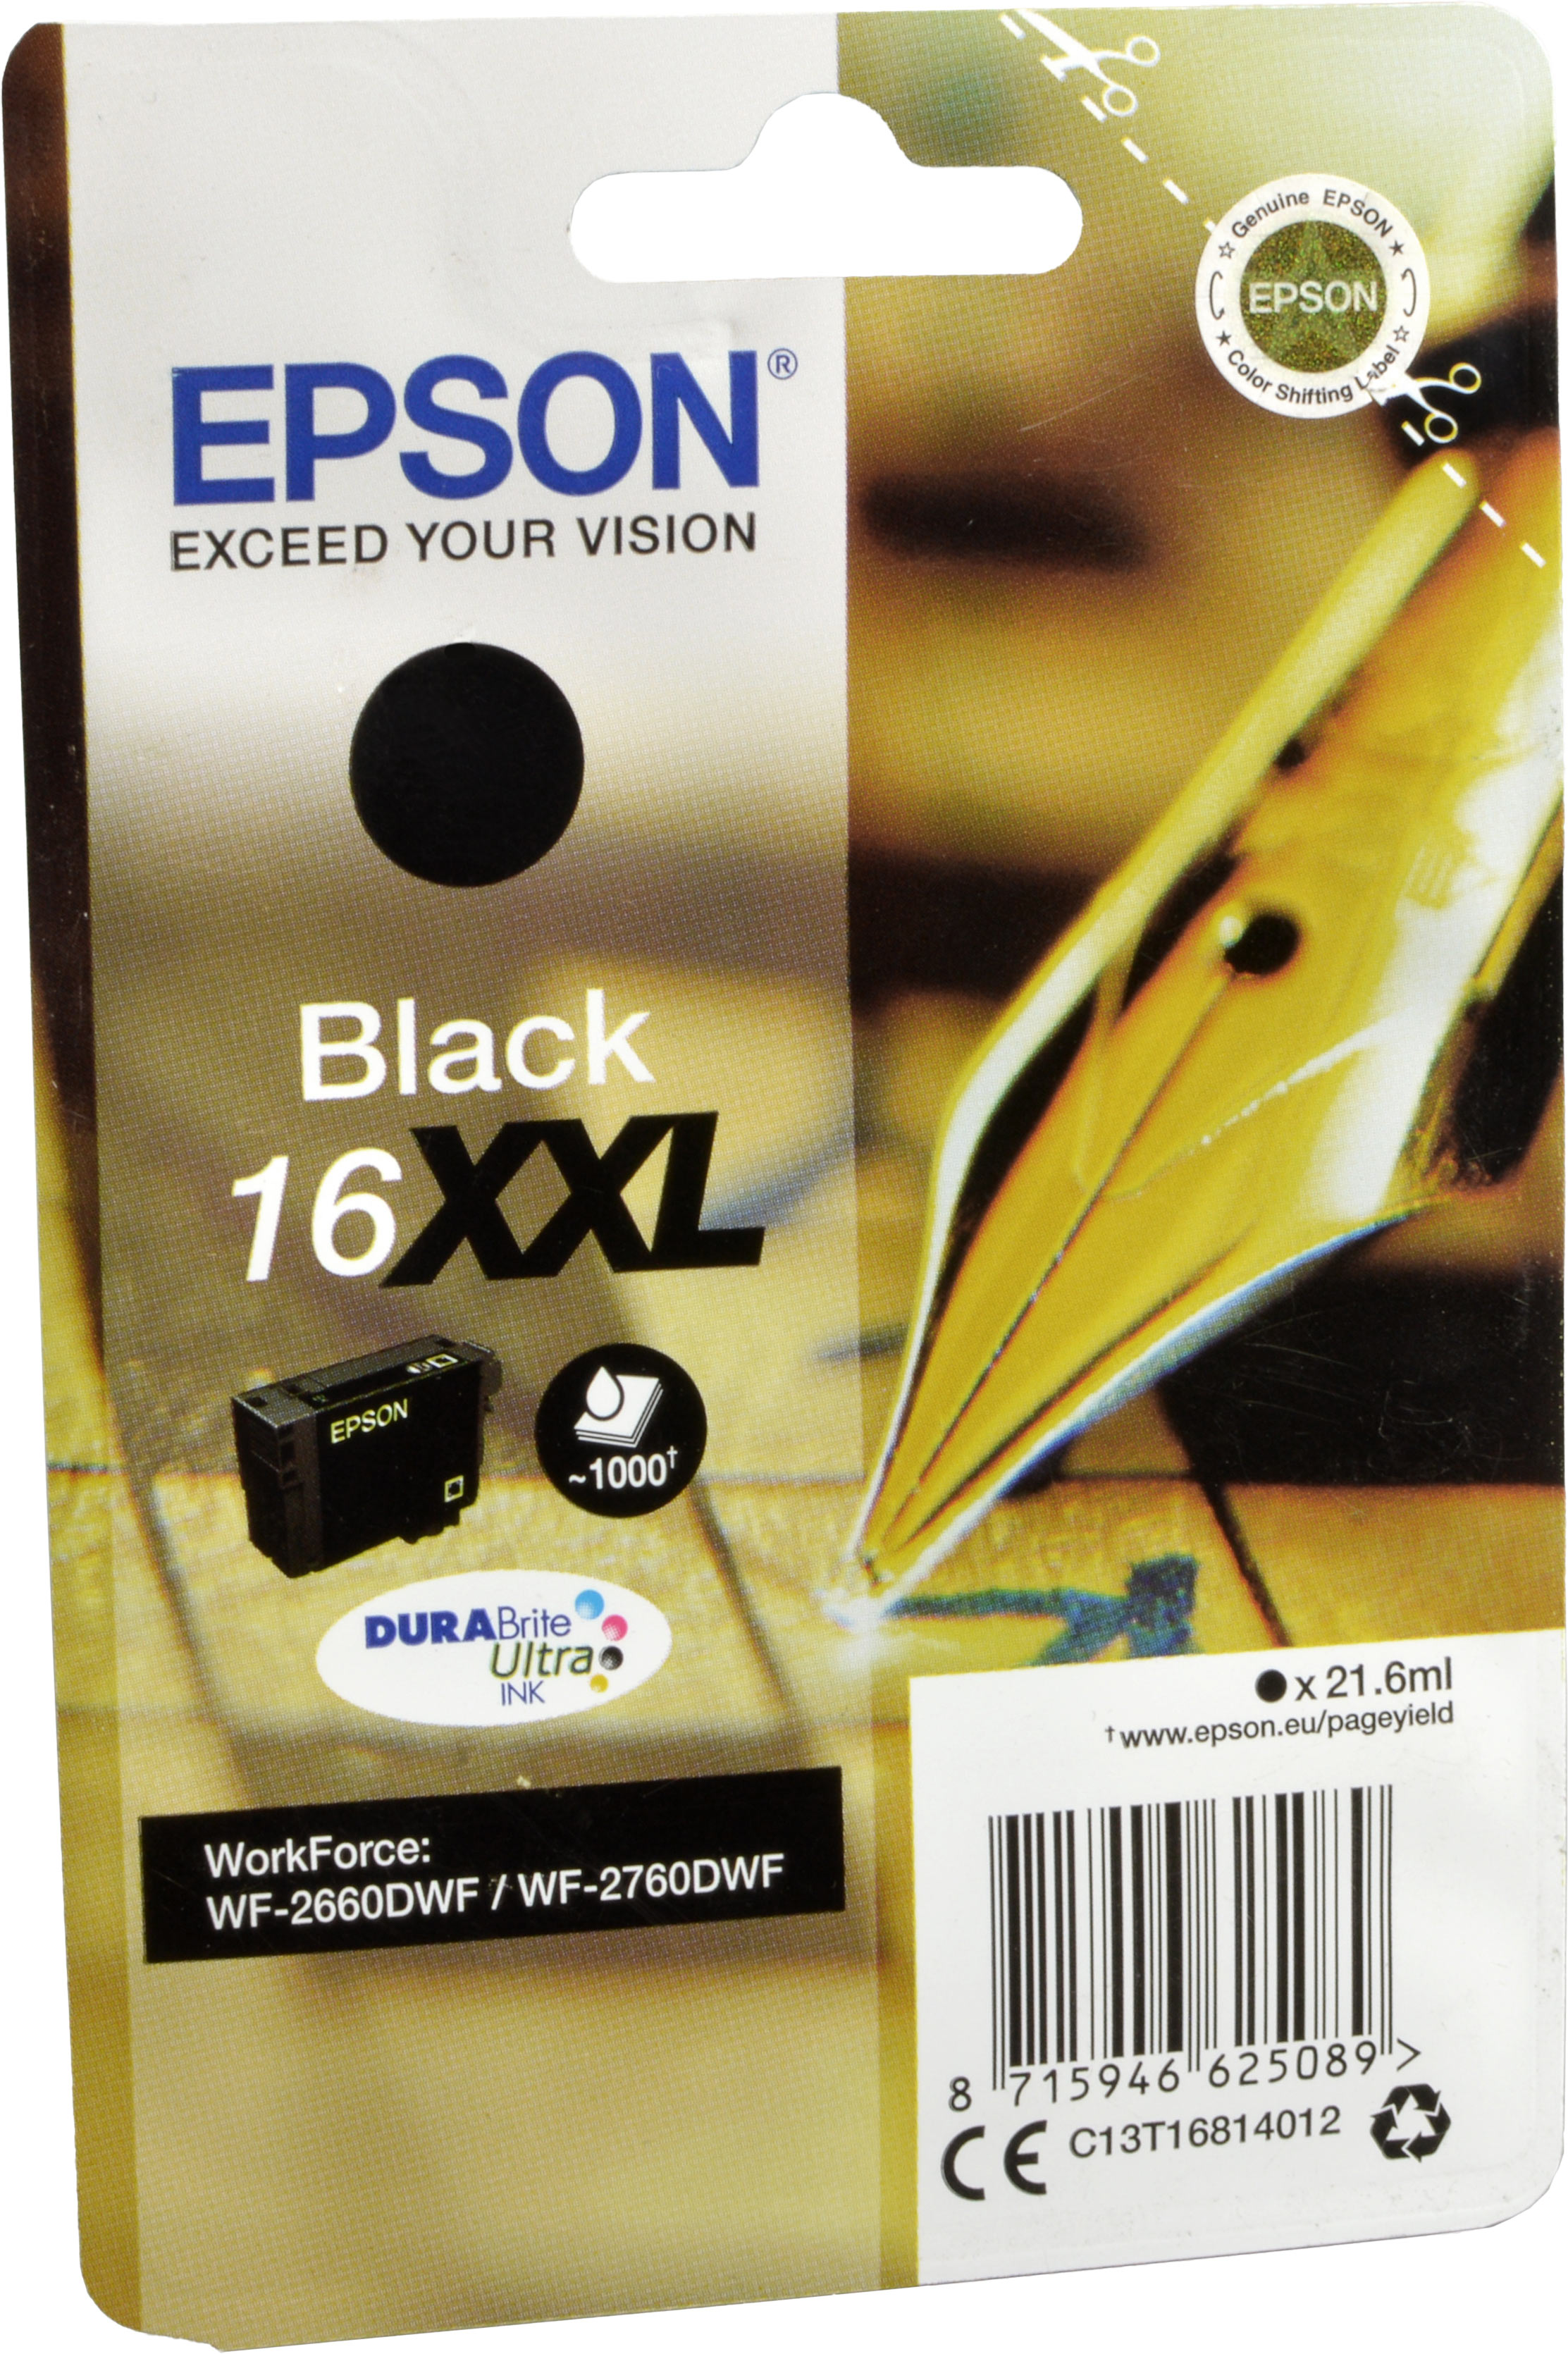 Epson Tinte C13T16814012  Black 16XXL  schwarz